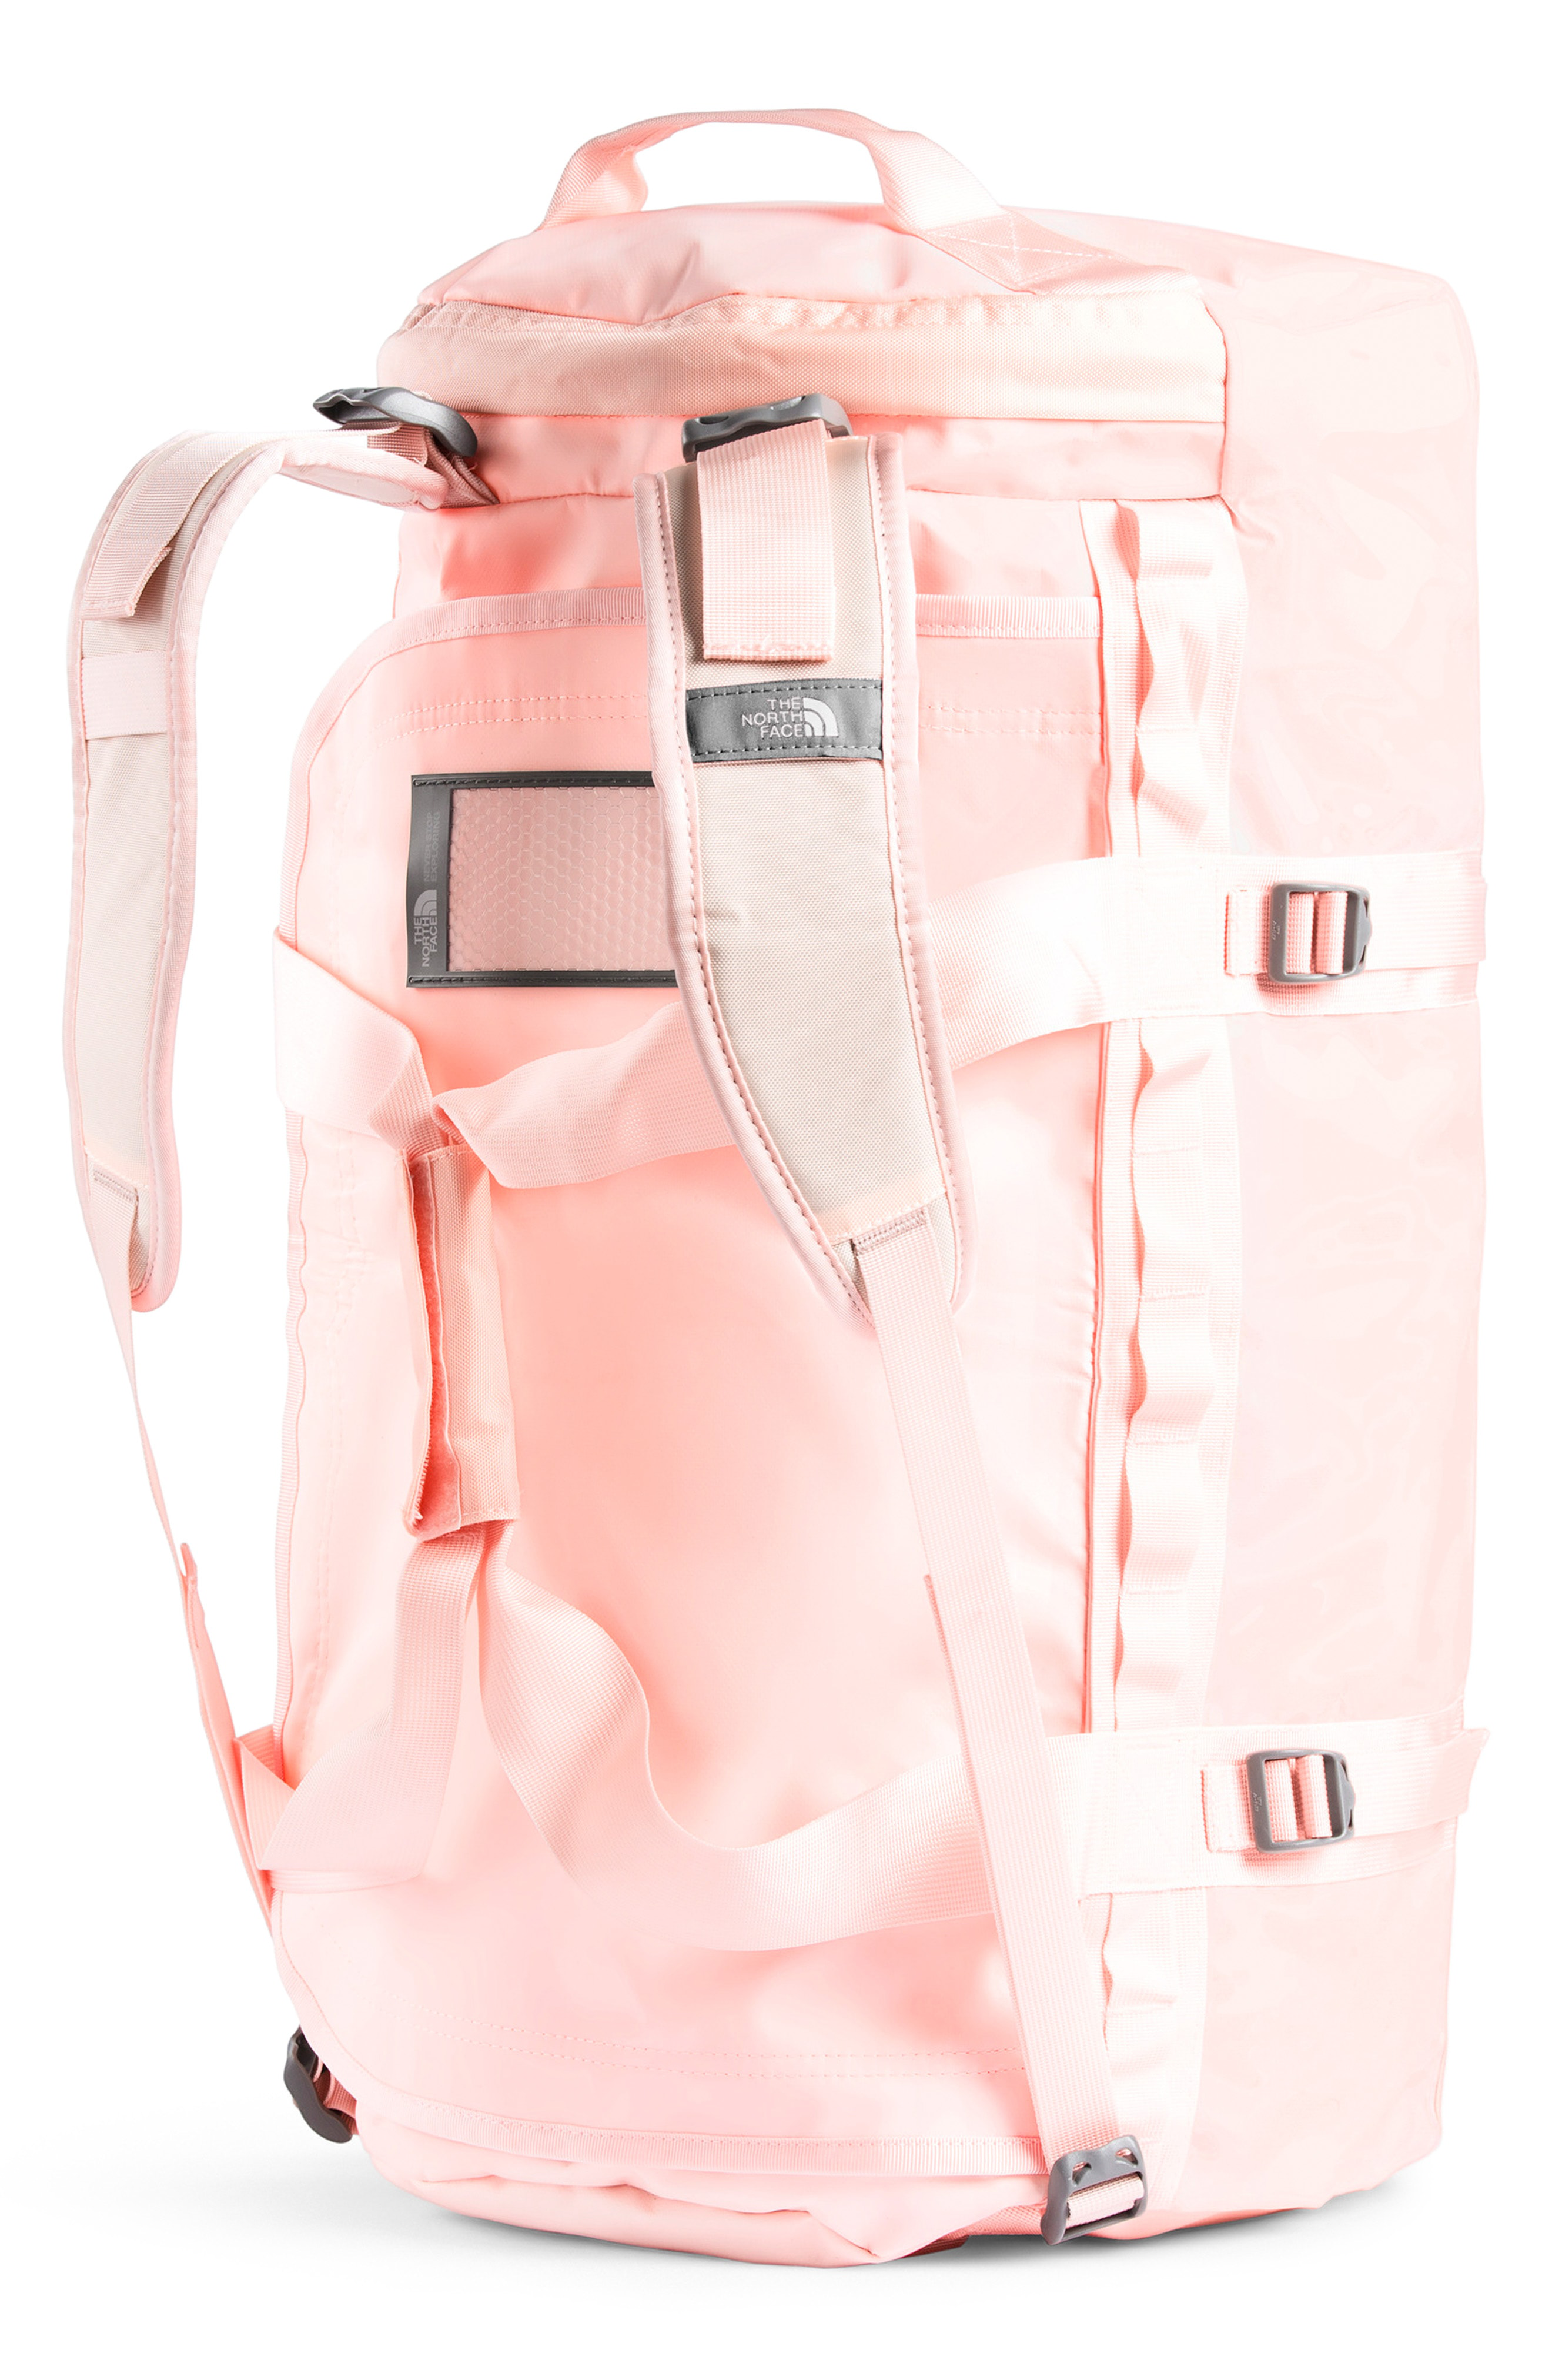 north face bag pink